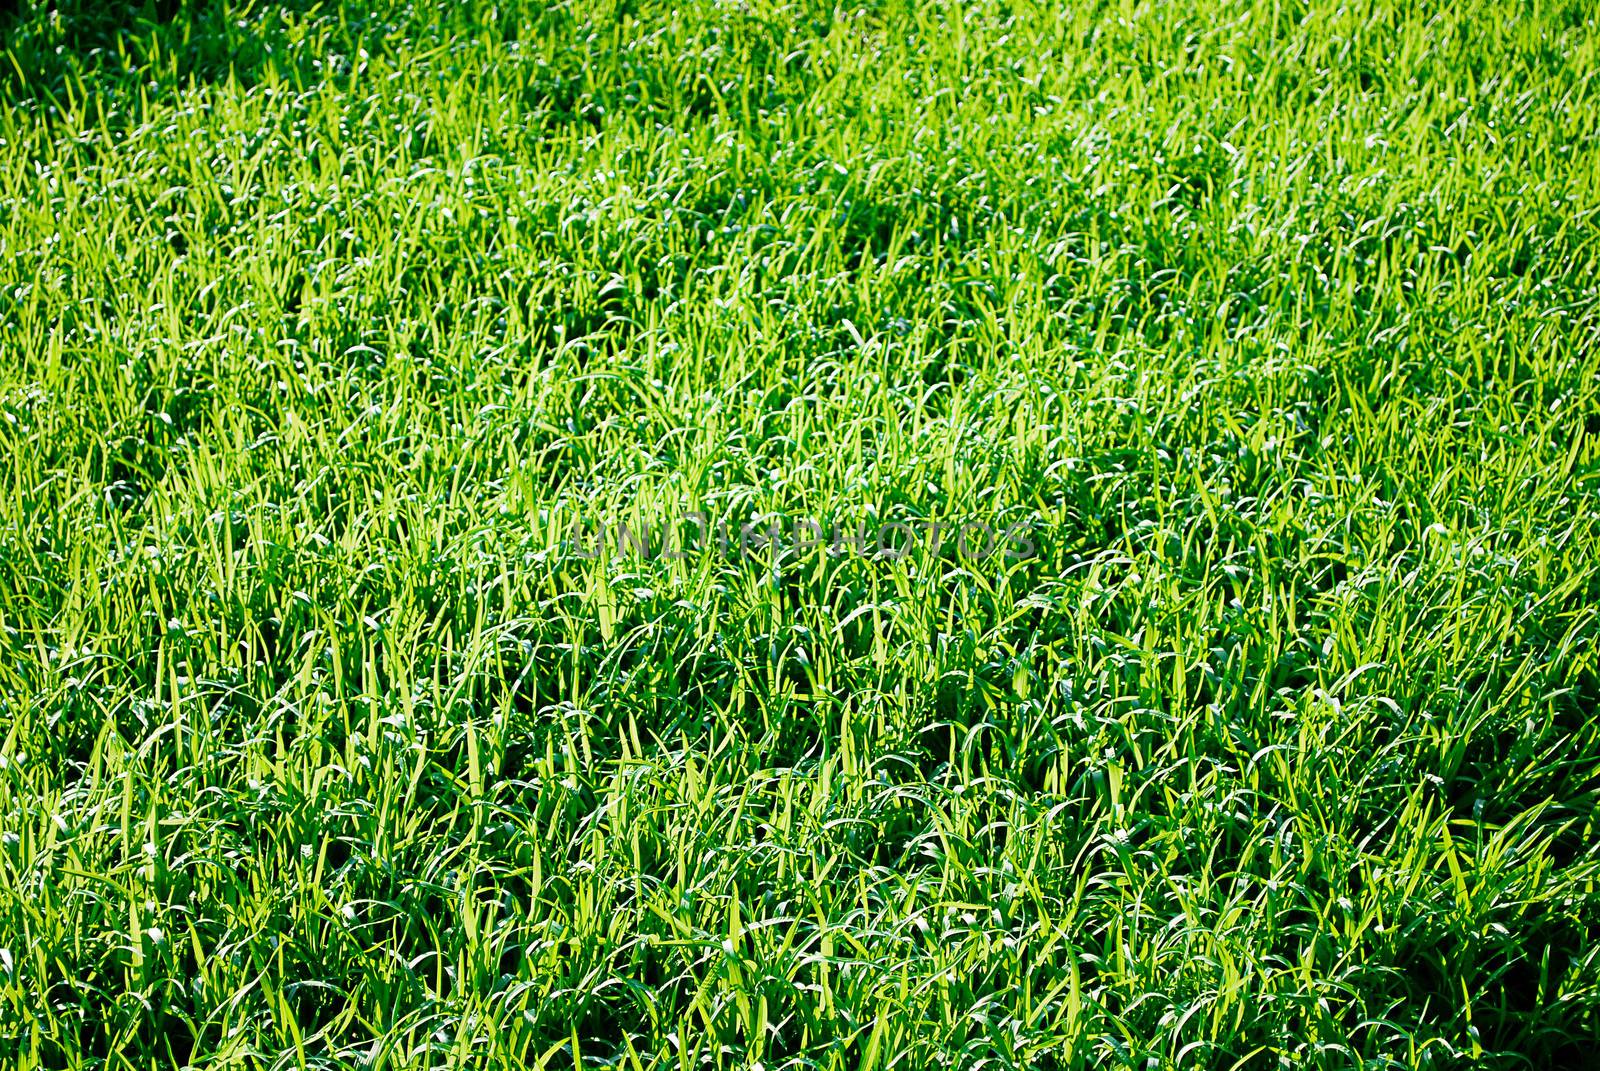 Sunlit Grass by Ale059